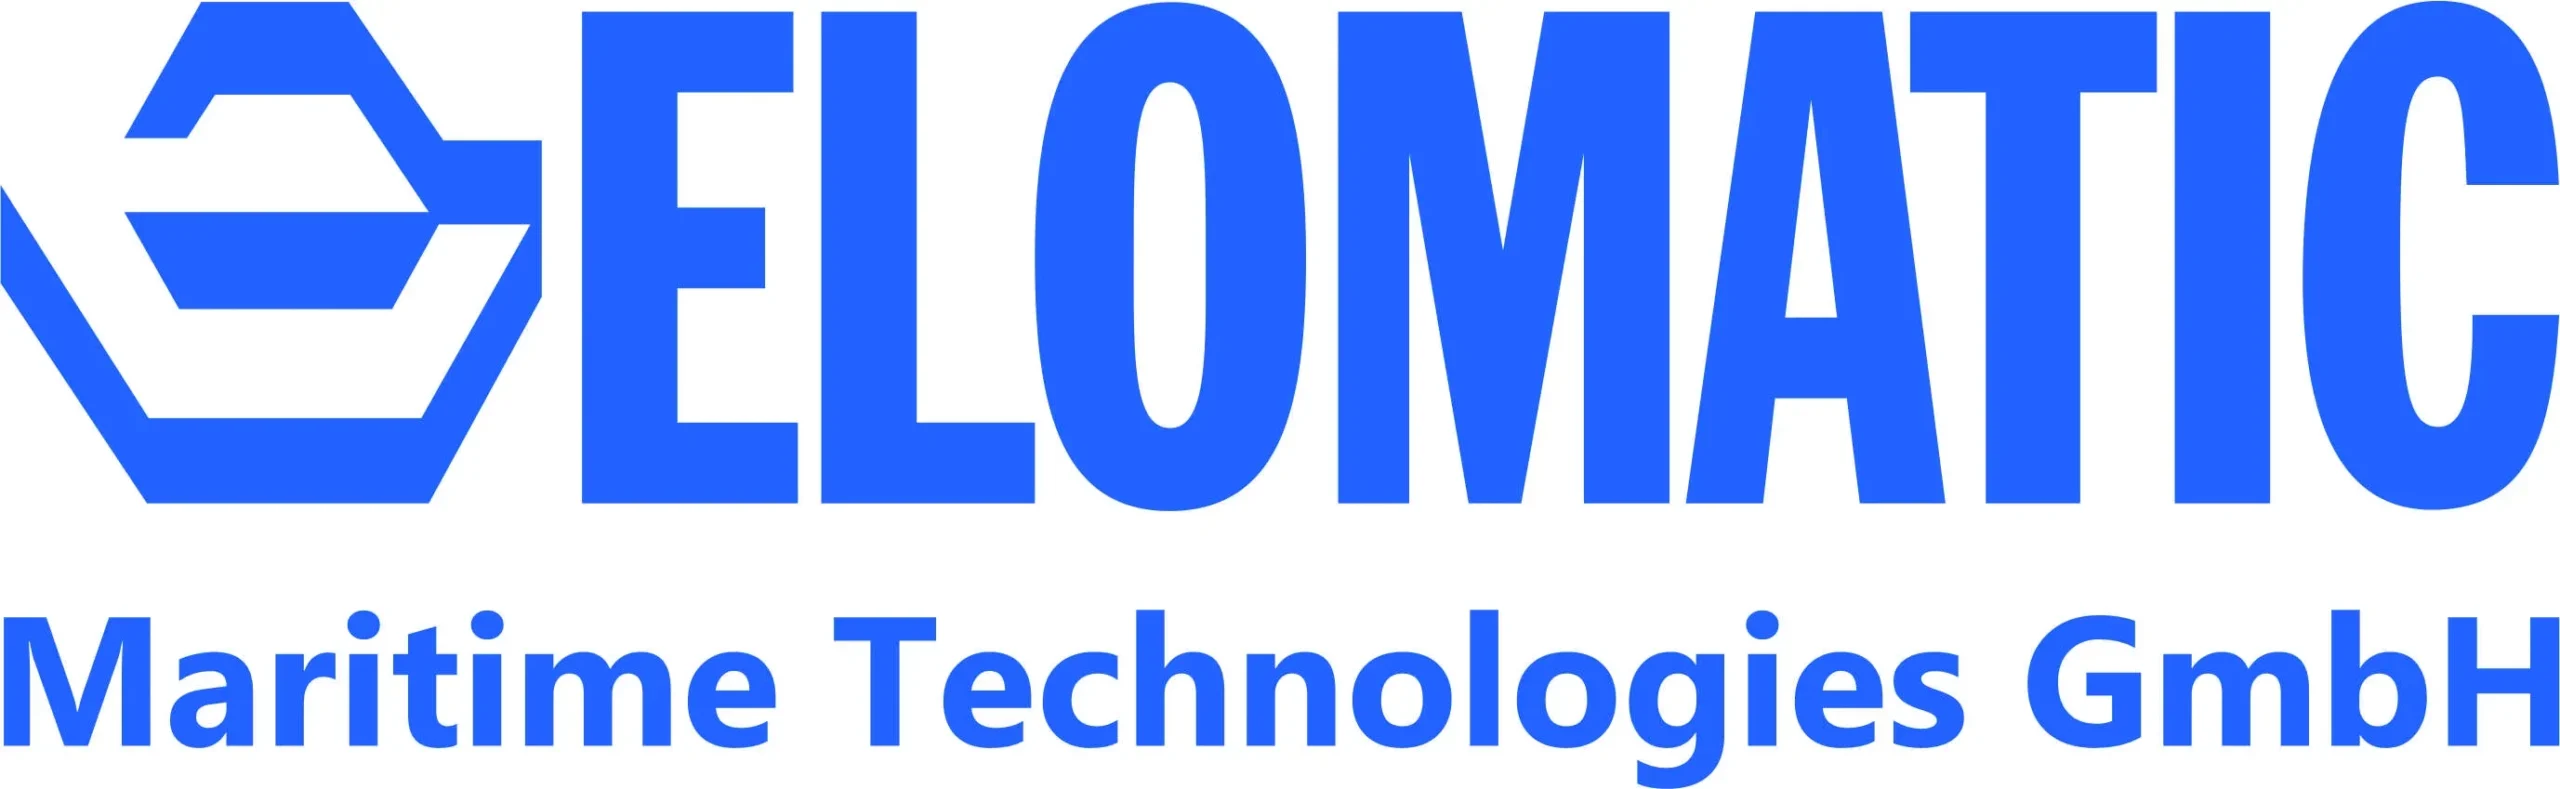 Logo Elomatic Maritime Technologies GmbH  - A Start-Up from Mecklenburg-Western Pomerania